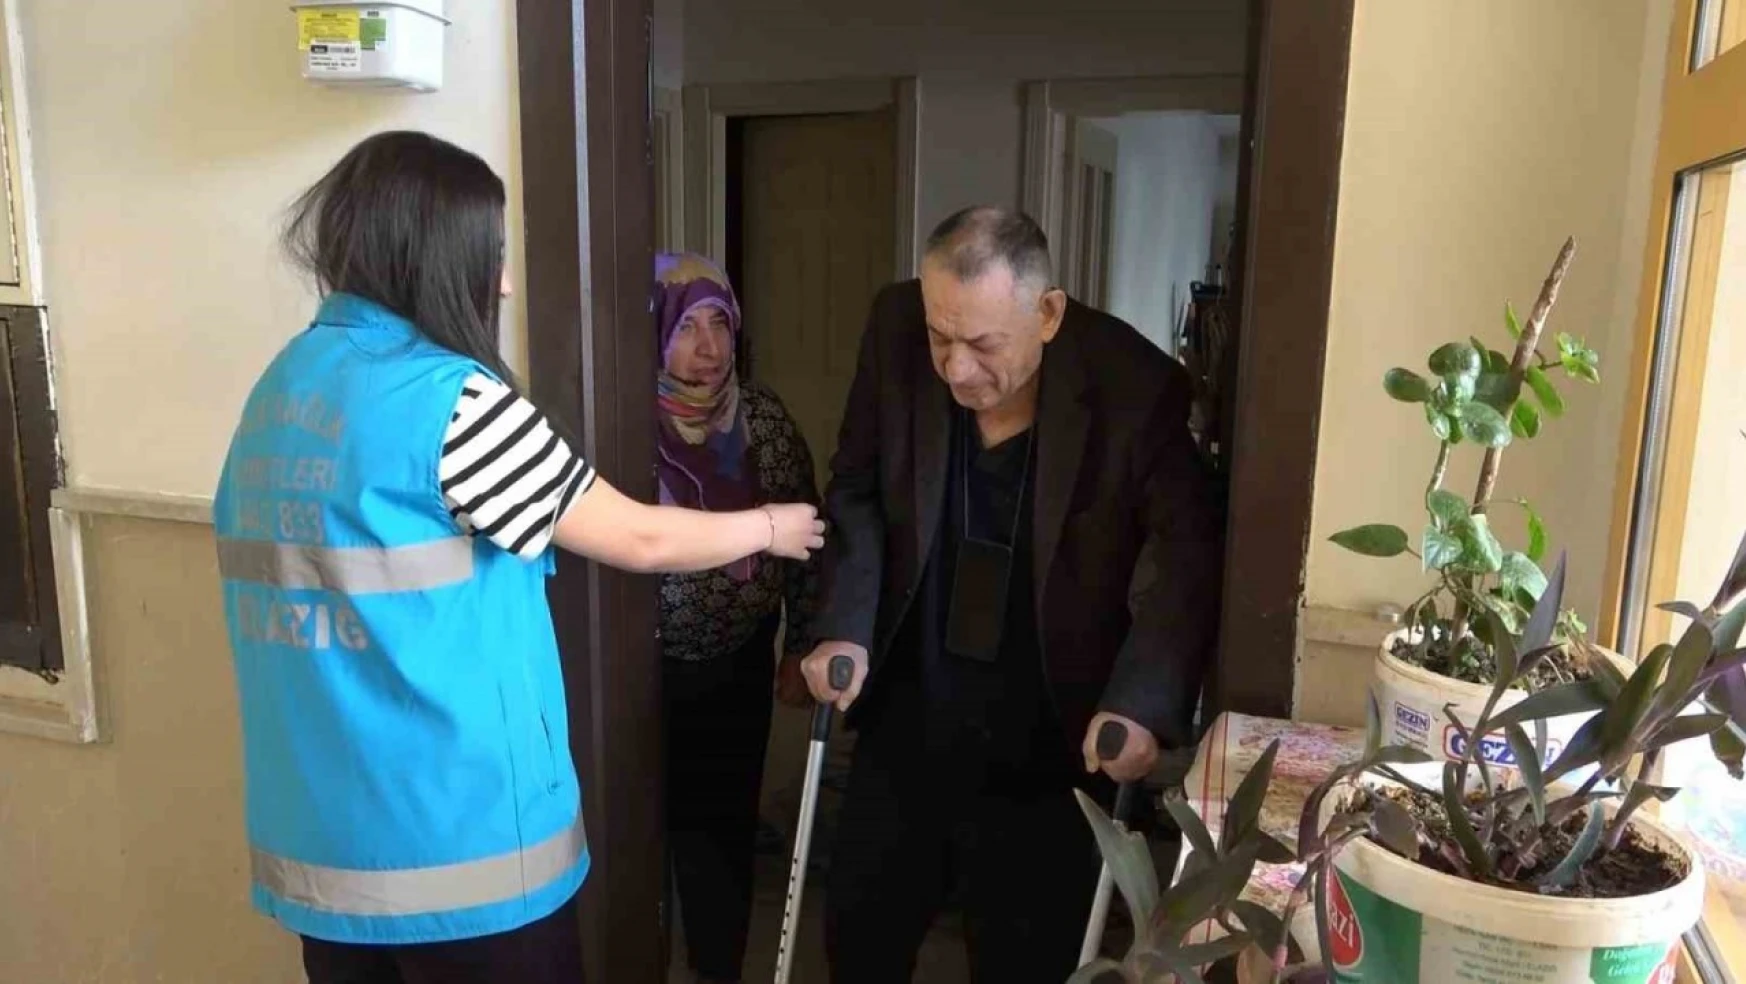 Elazığ'da yaşlı çiftin seçim atışması